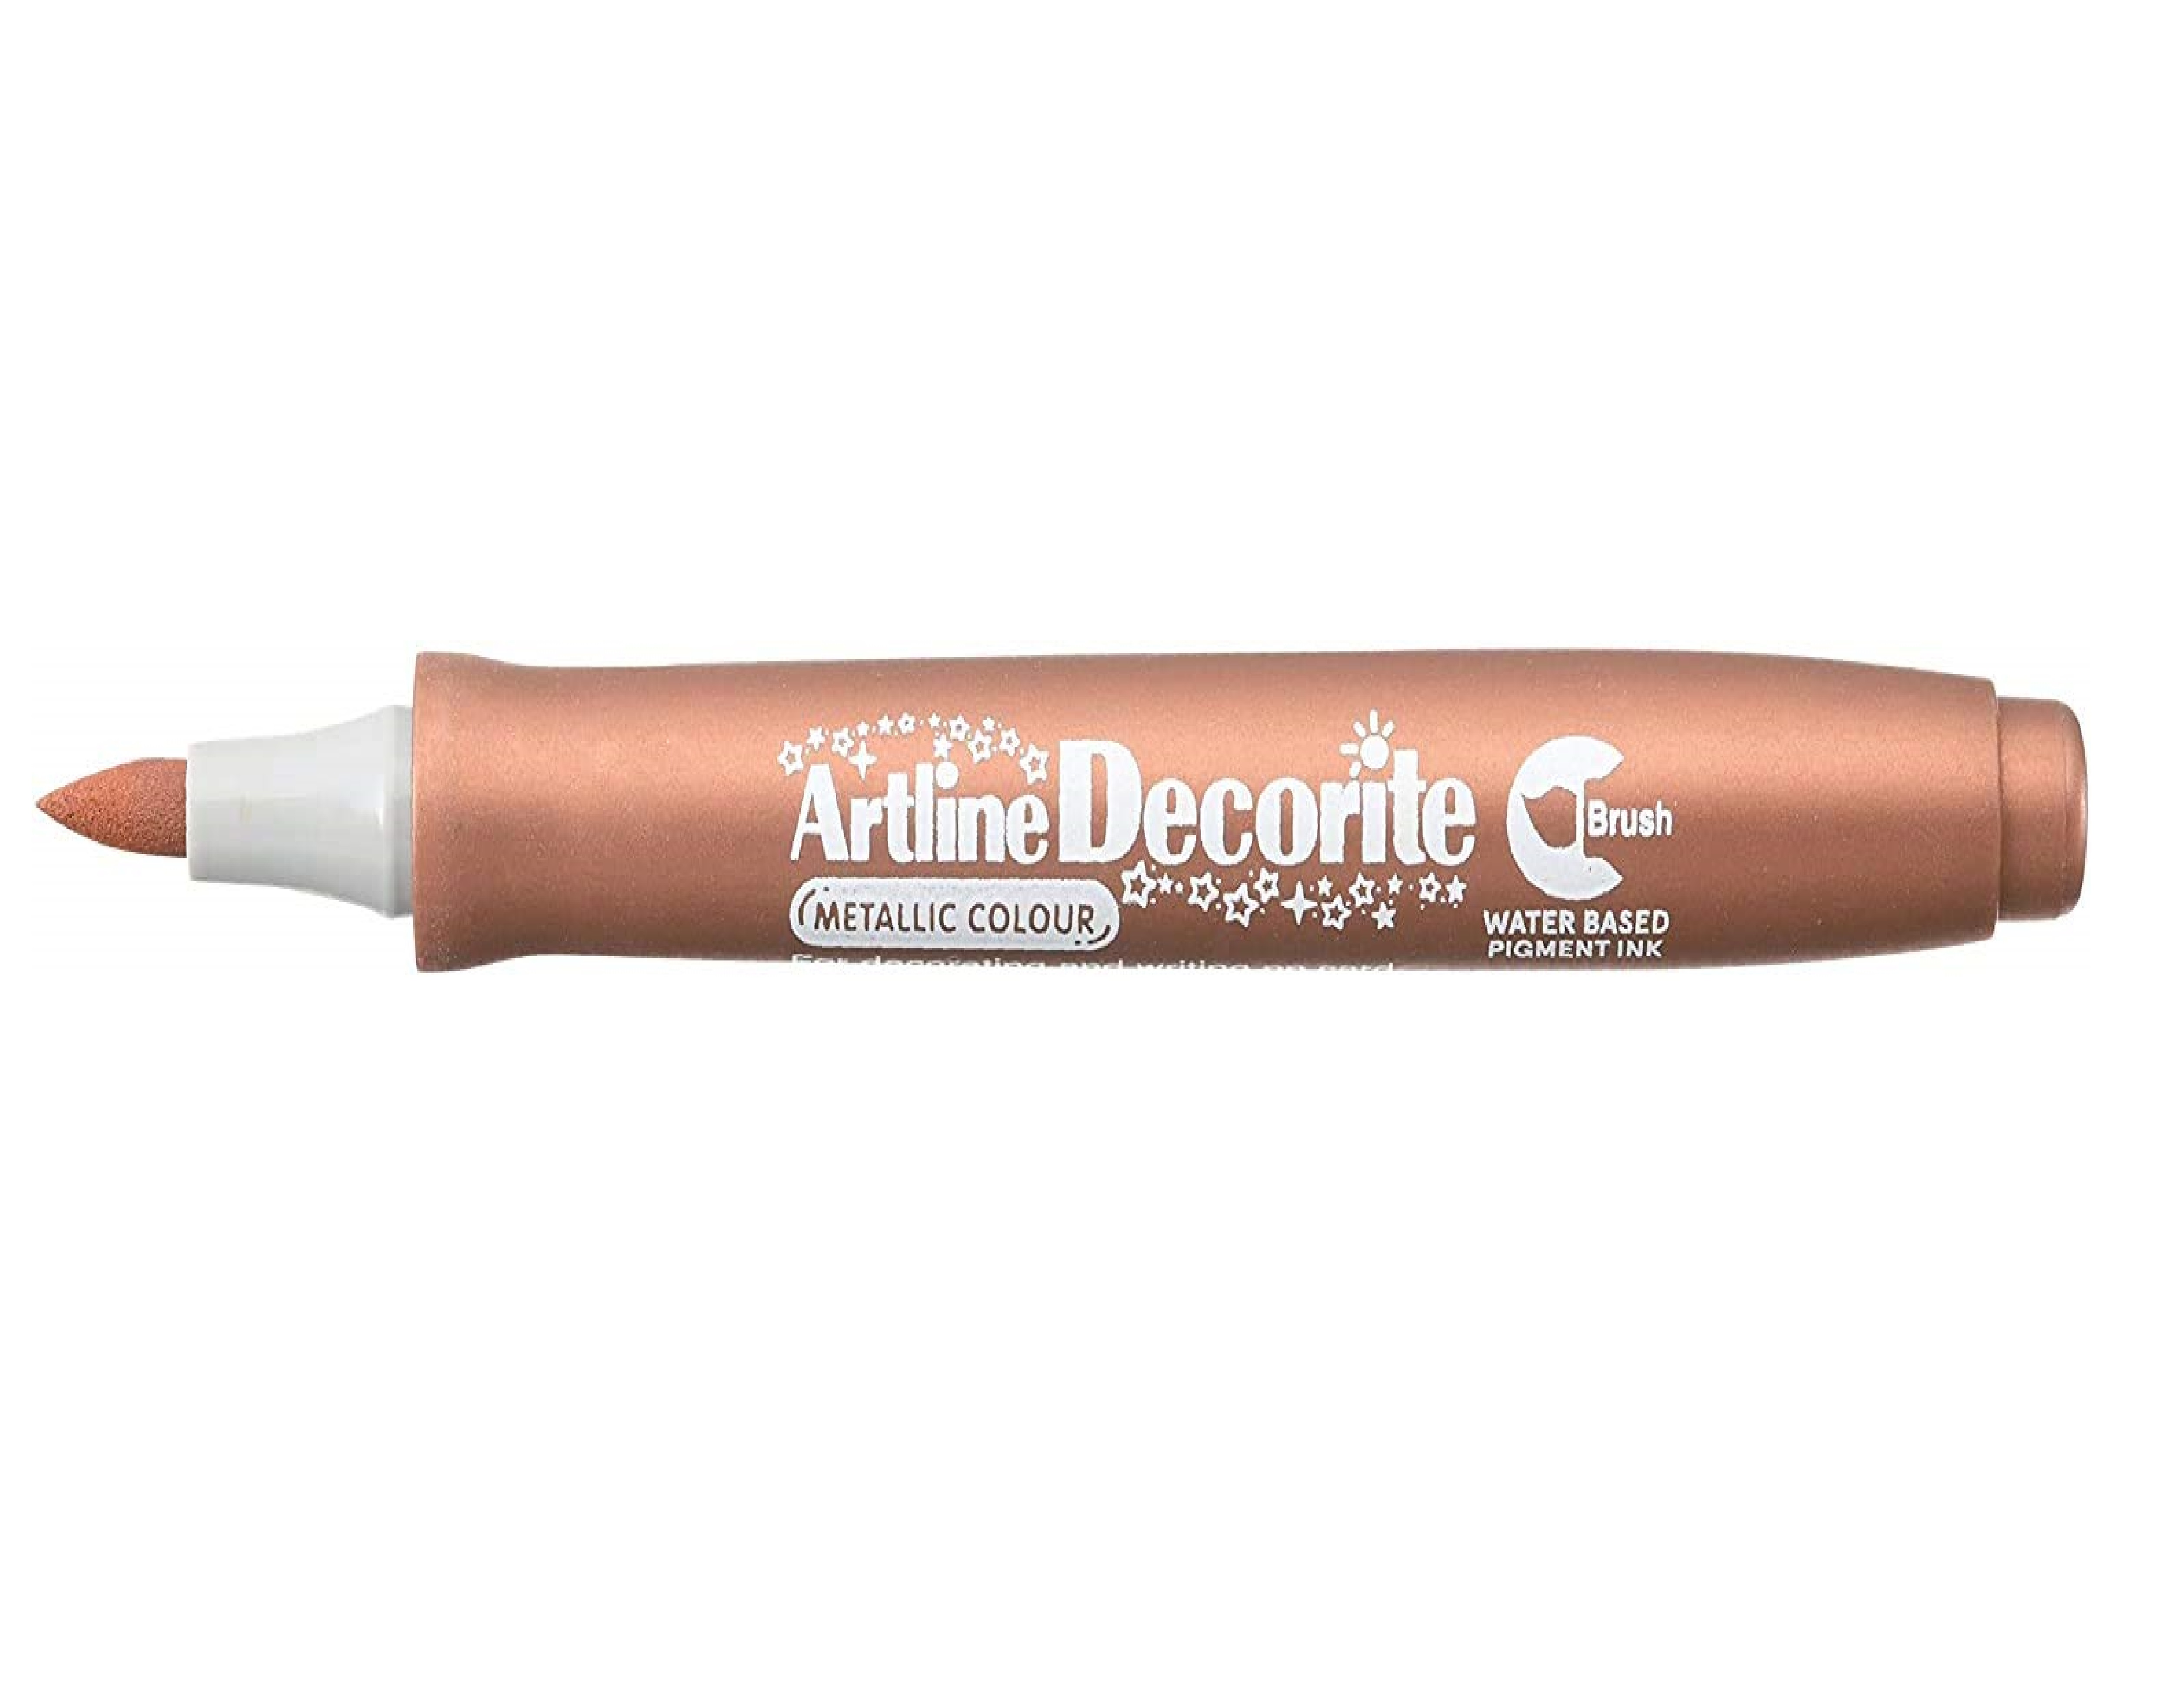 Artline Decorite Brush Marker Pen for Card, Glass, Metal and Plastic (Bronze)